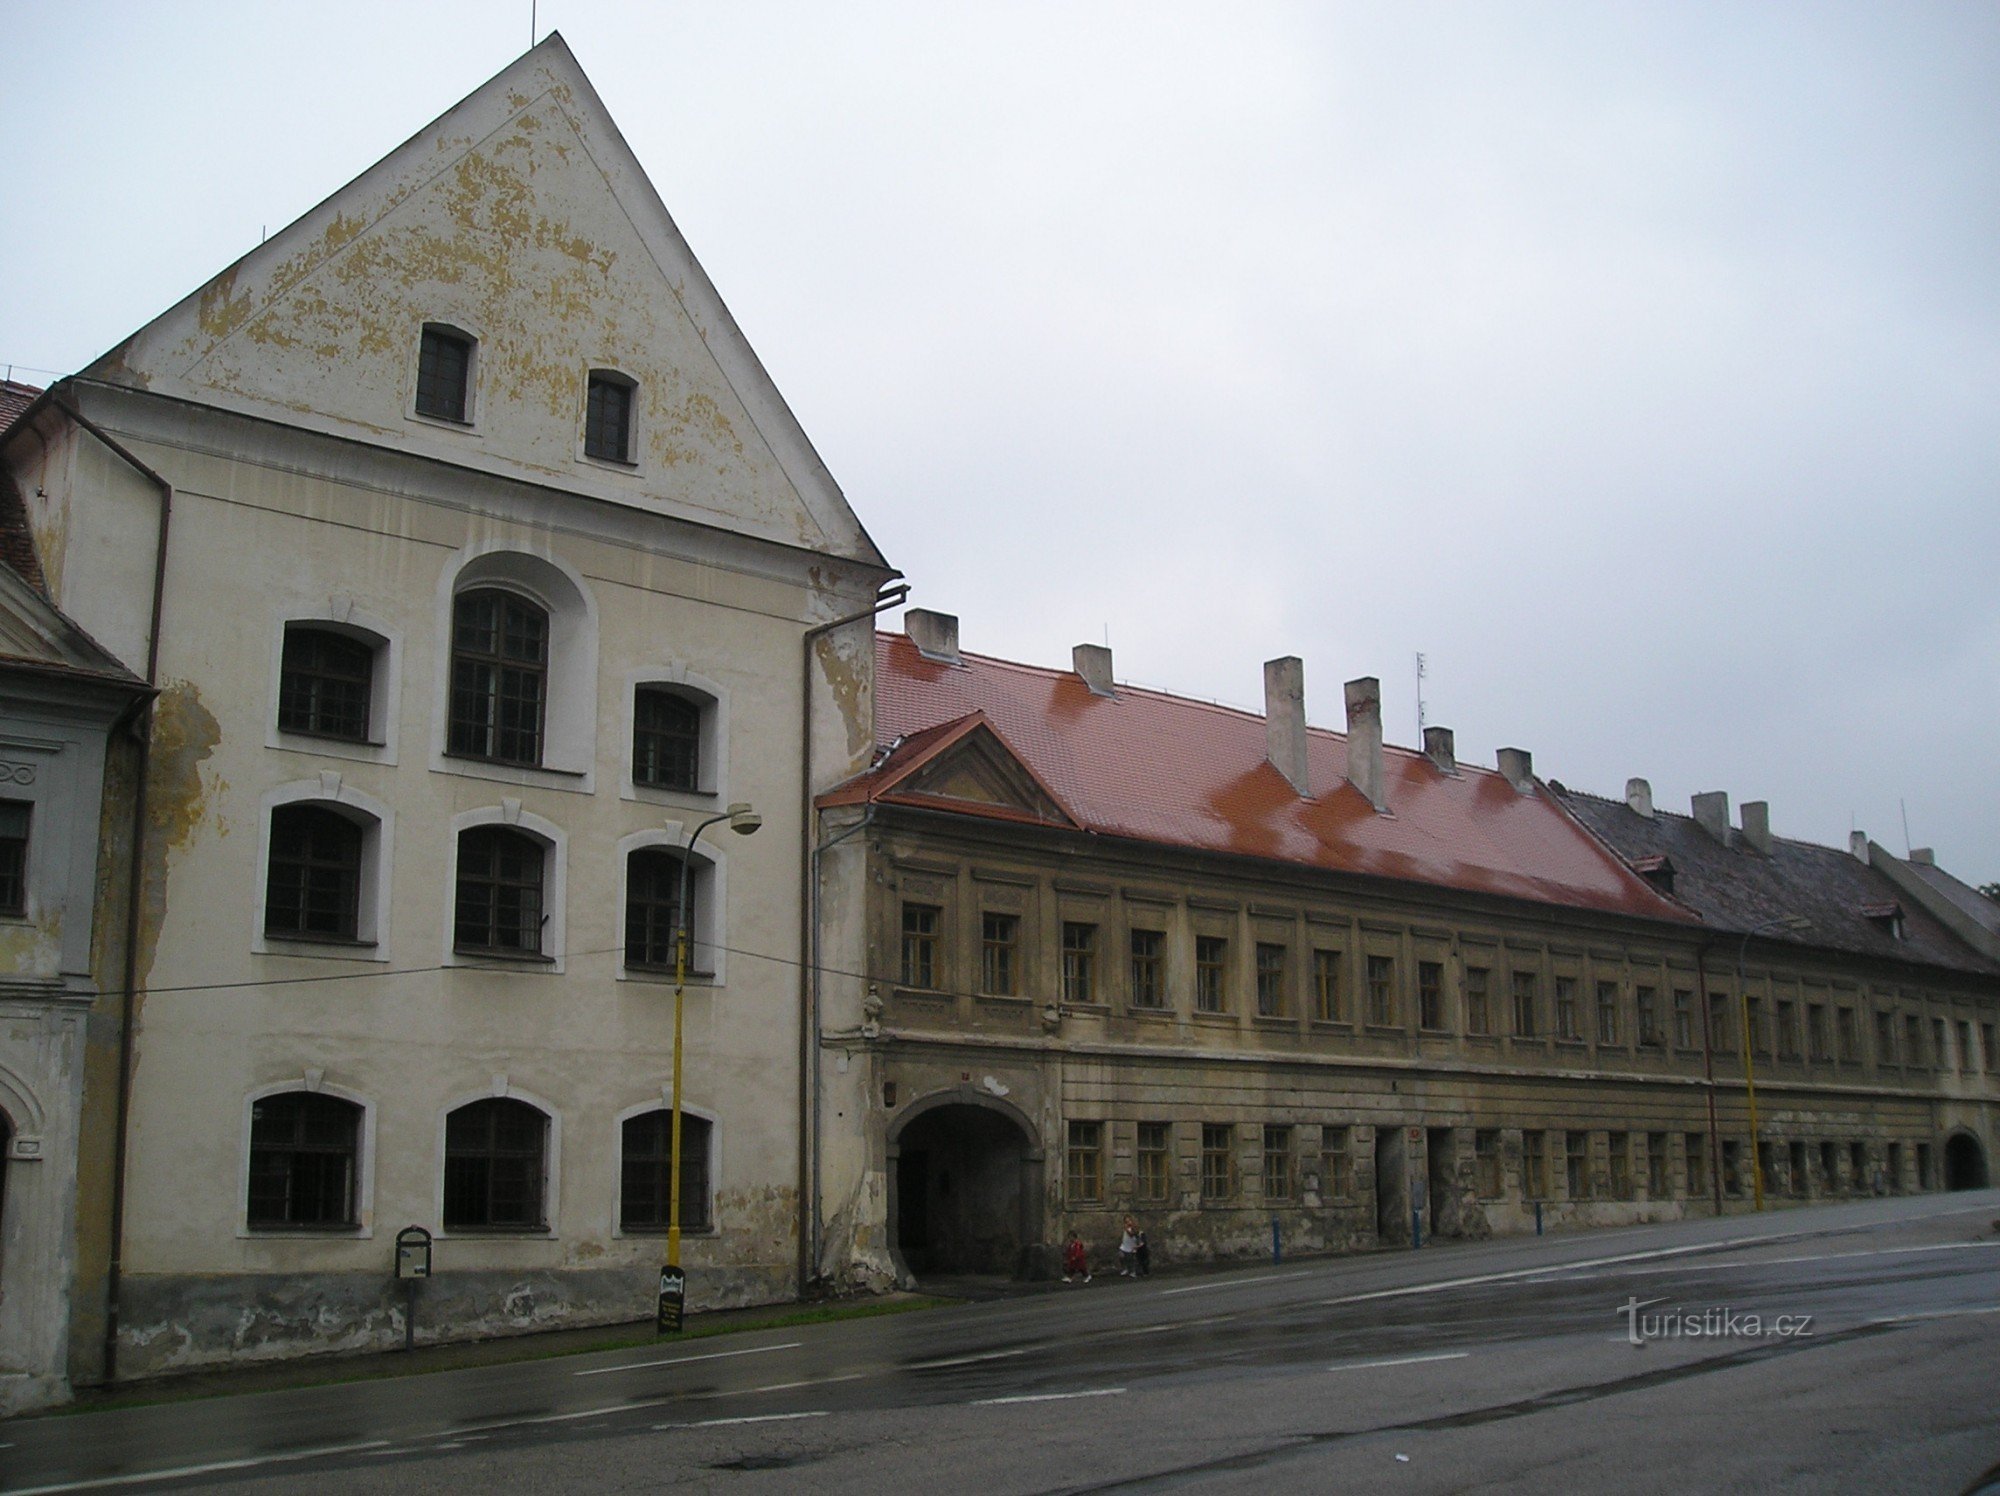 Fabryka klasztorna